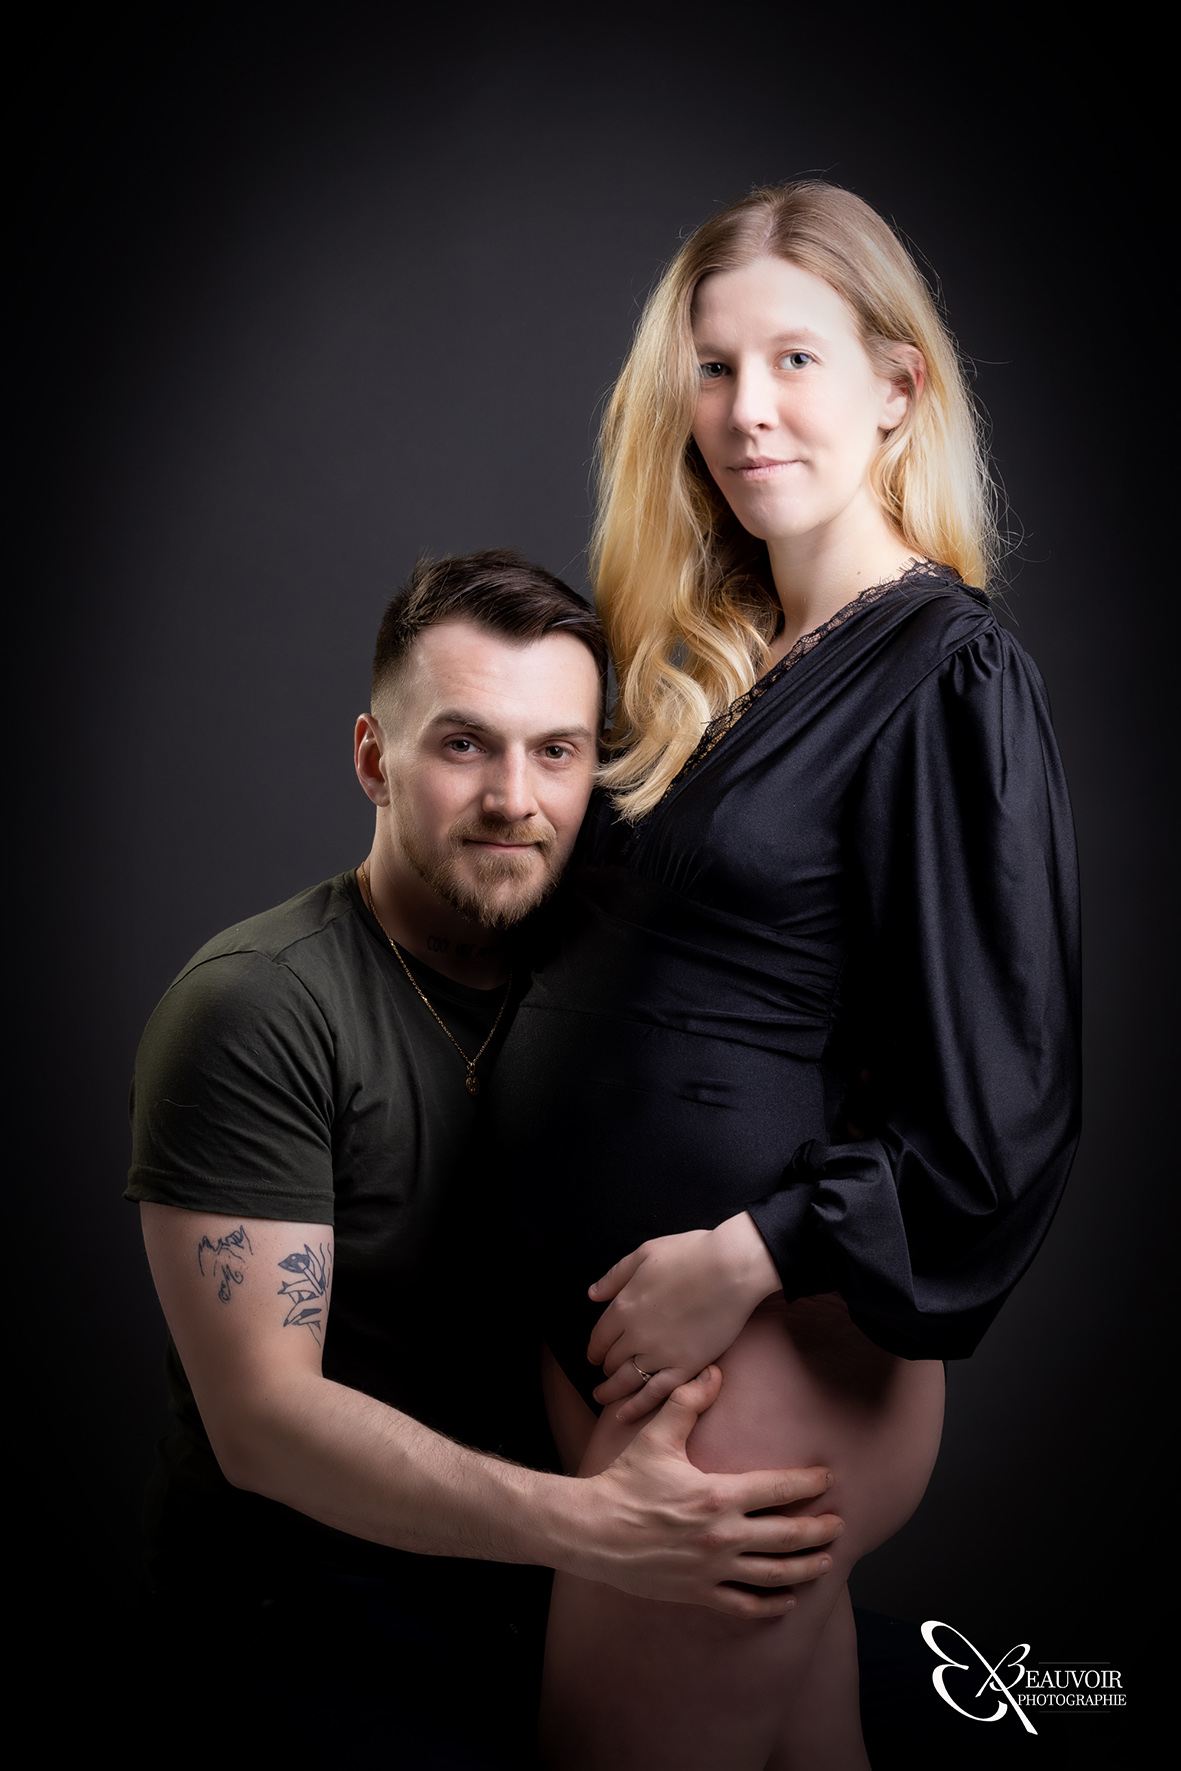 BeauvoirPhotographie Photographe grossesse pregnant chambery savoie shooting studiophoto maternite mumtobe 03